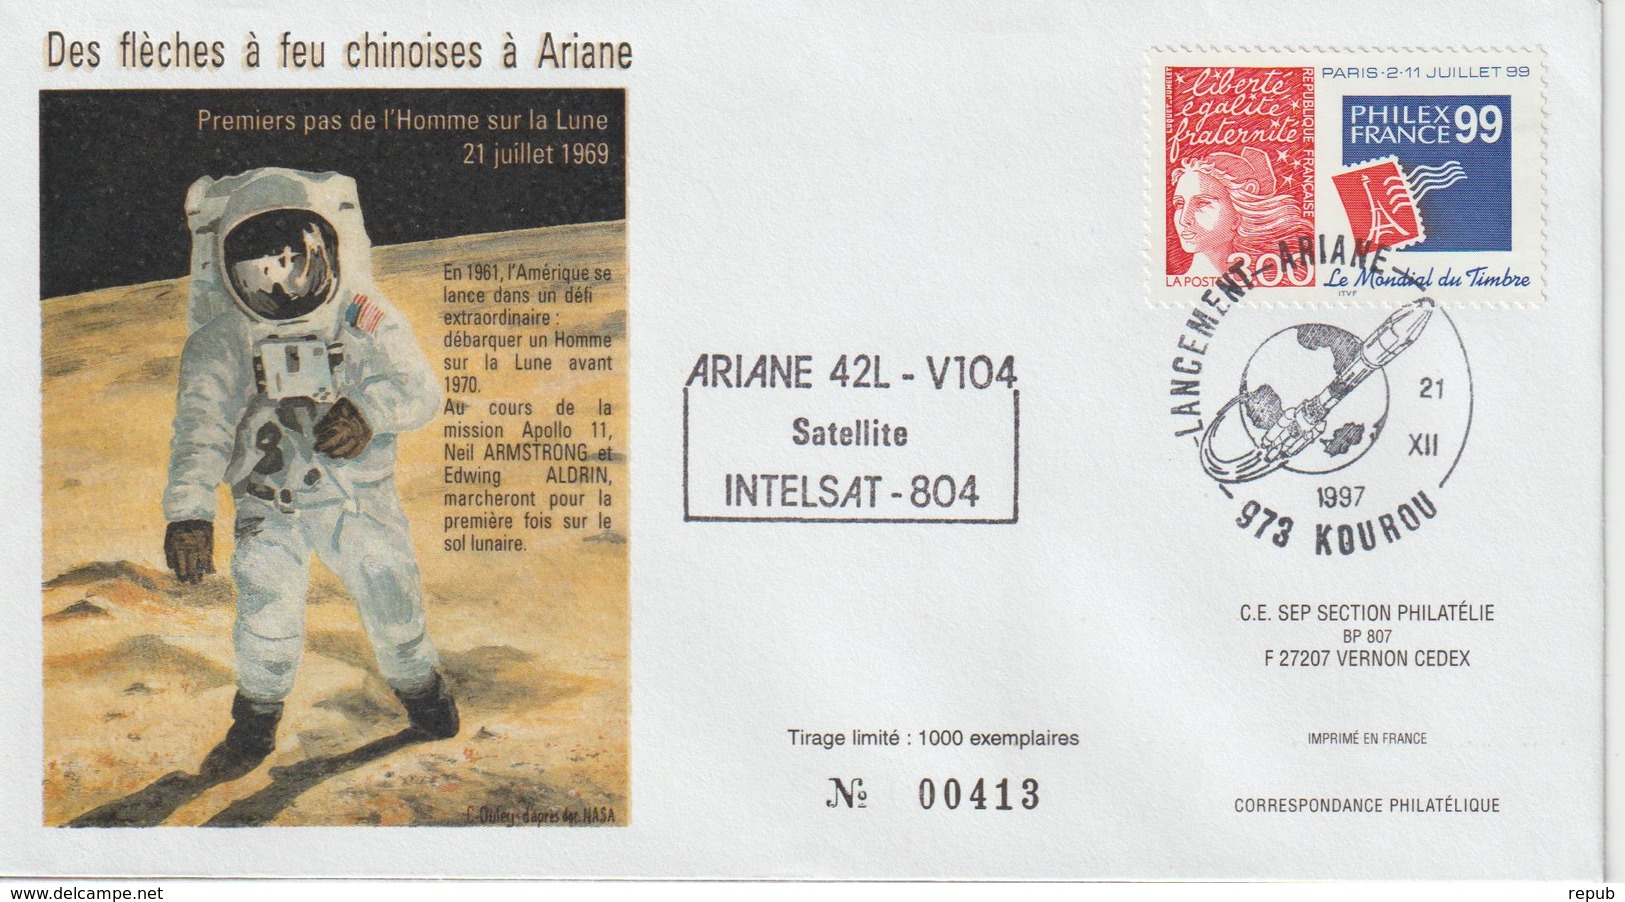 France Kourou 1997 Lancement Ariane Vol 104 - Commemorative Postmarks